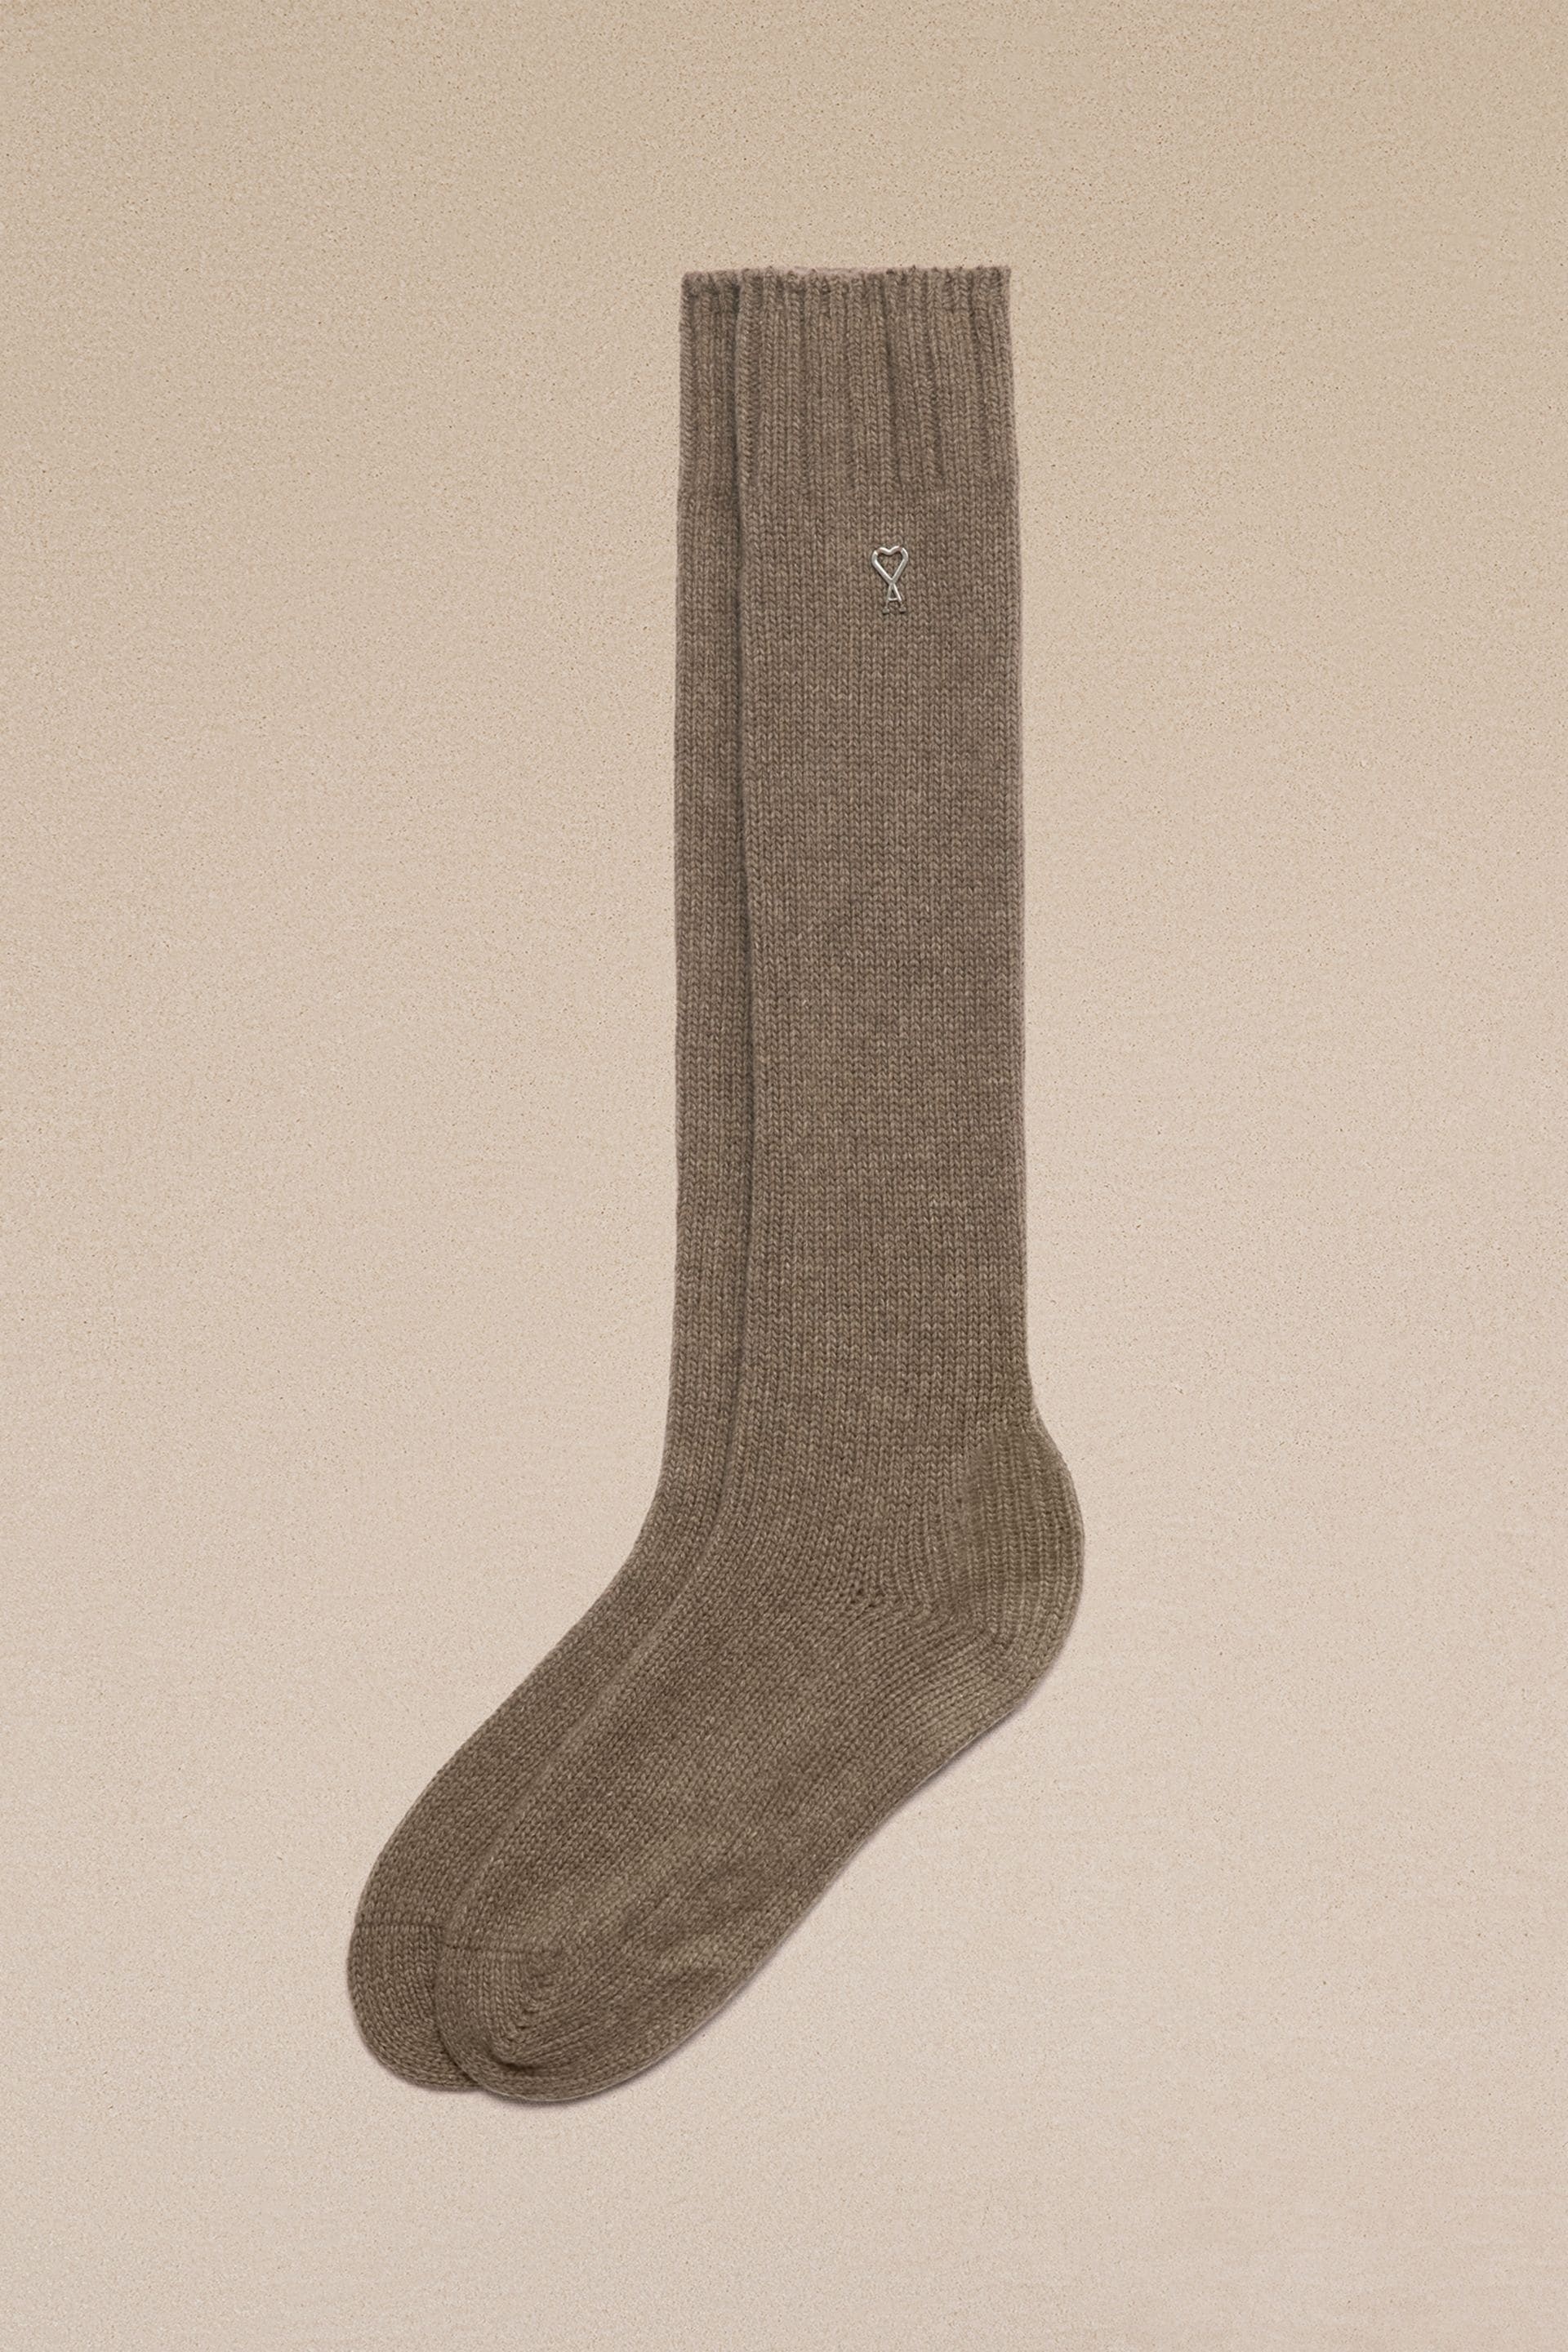 Ami De Coeur Knee High Socks - 1